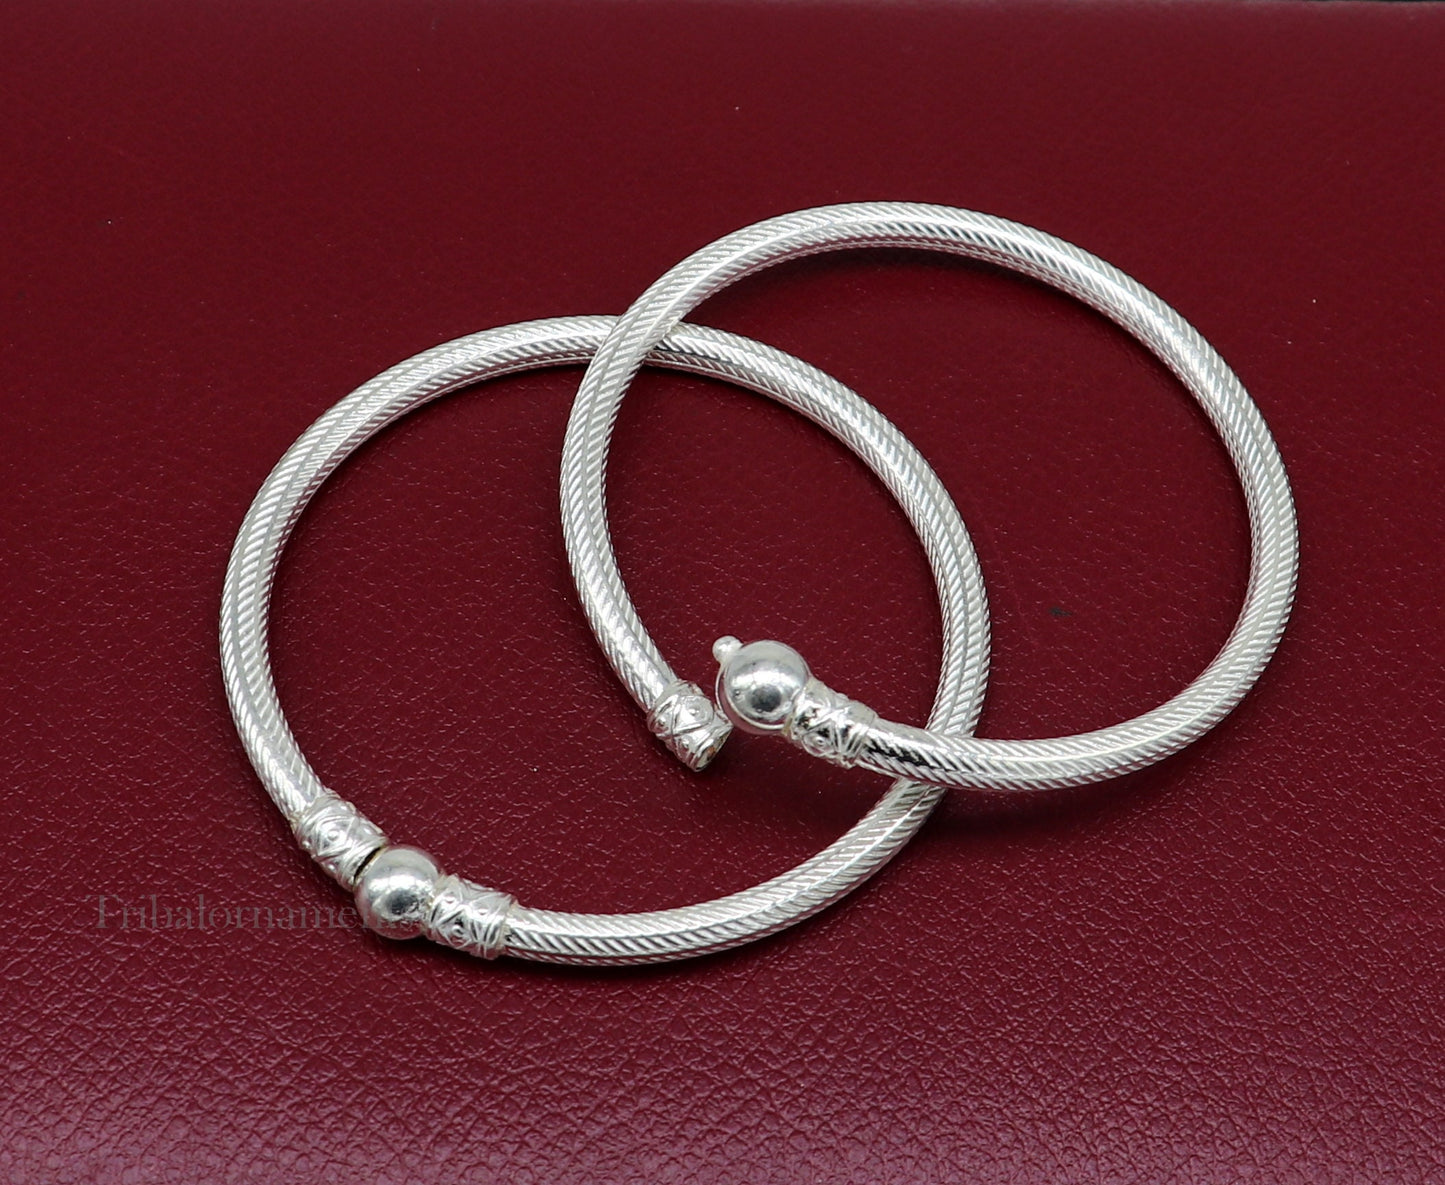 Sterling silver handmade amazing design bangle bracelet kangan chudi, excellent customized design bangle kada gift tribal jewelry  nba210 - TRIBAL ORNAMENTS